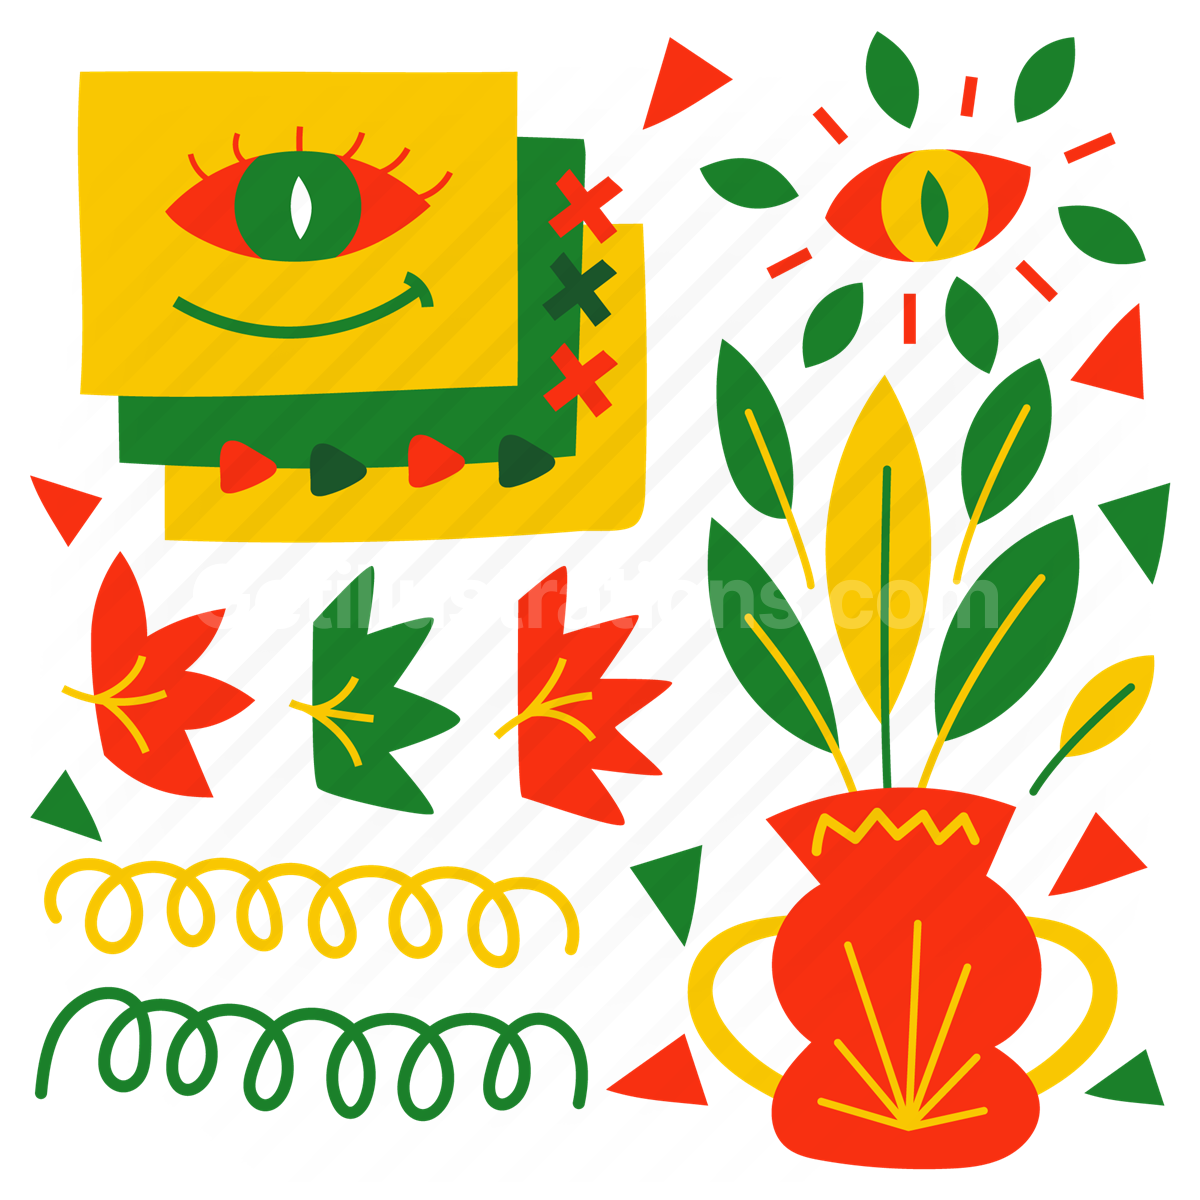 background, decor, decoration, element, shapes, leaf, leaves, vase, pot, eye, eyes